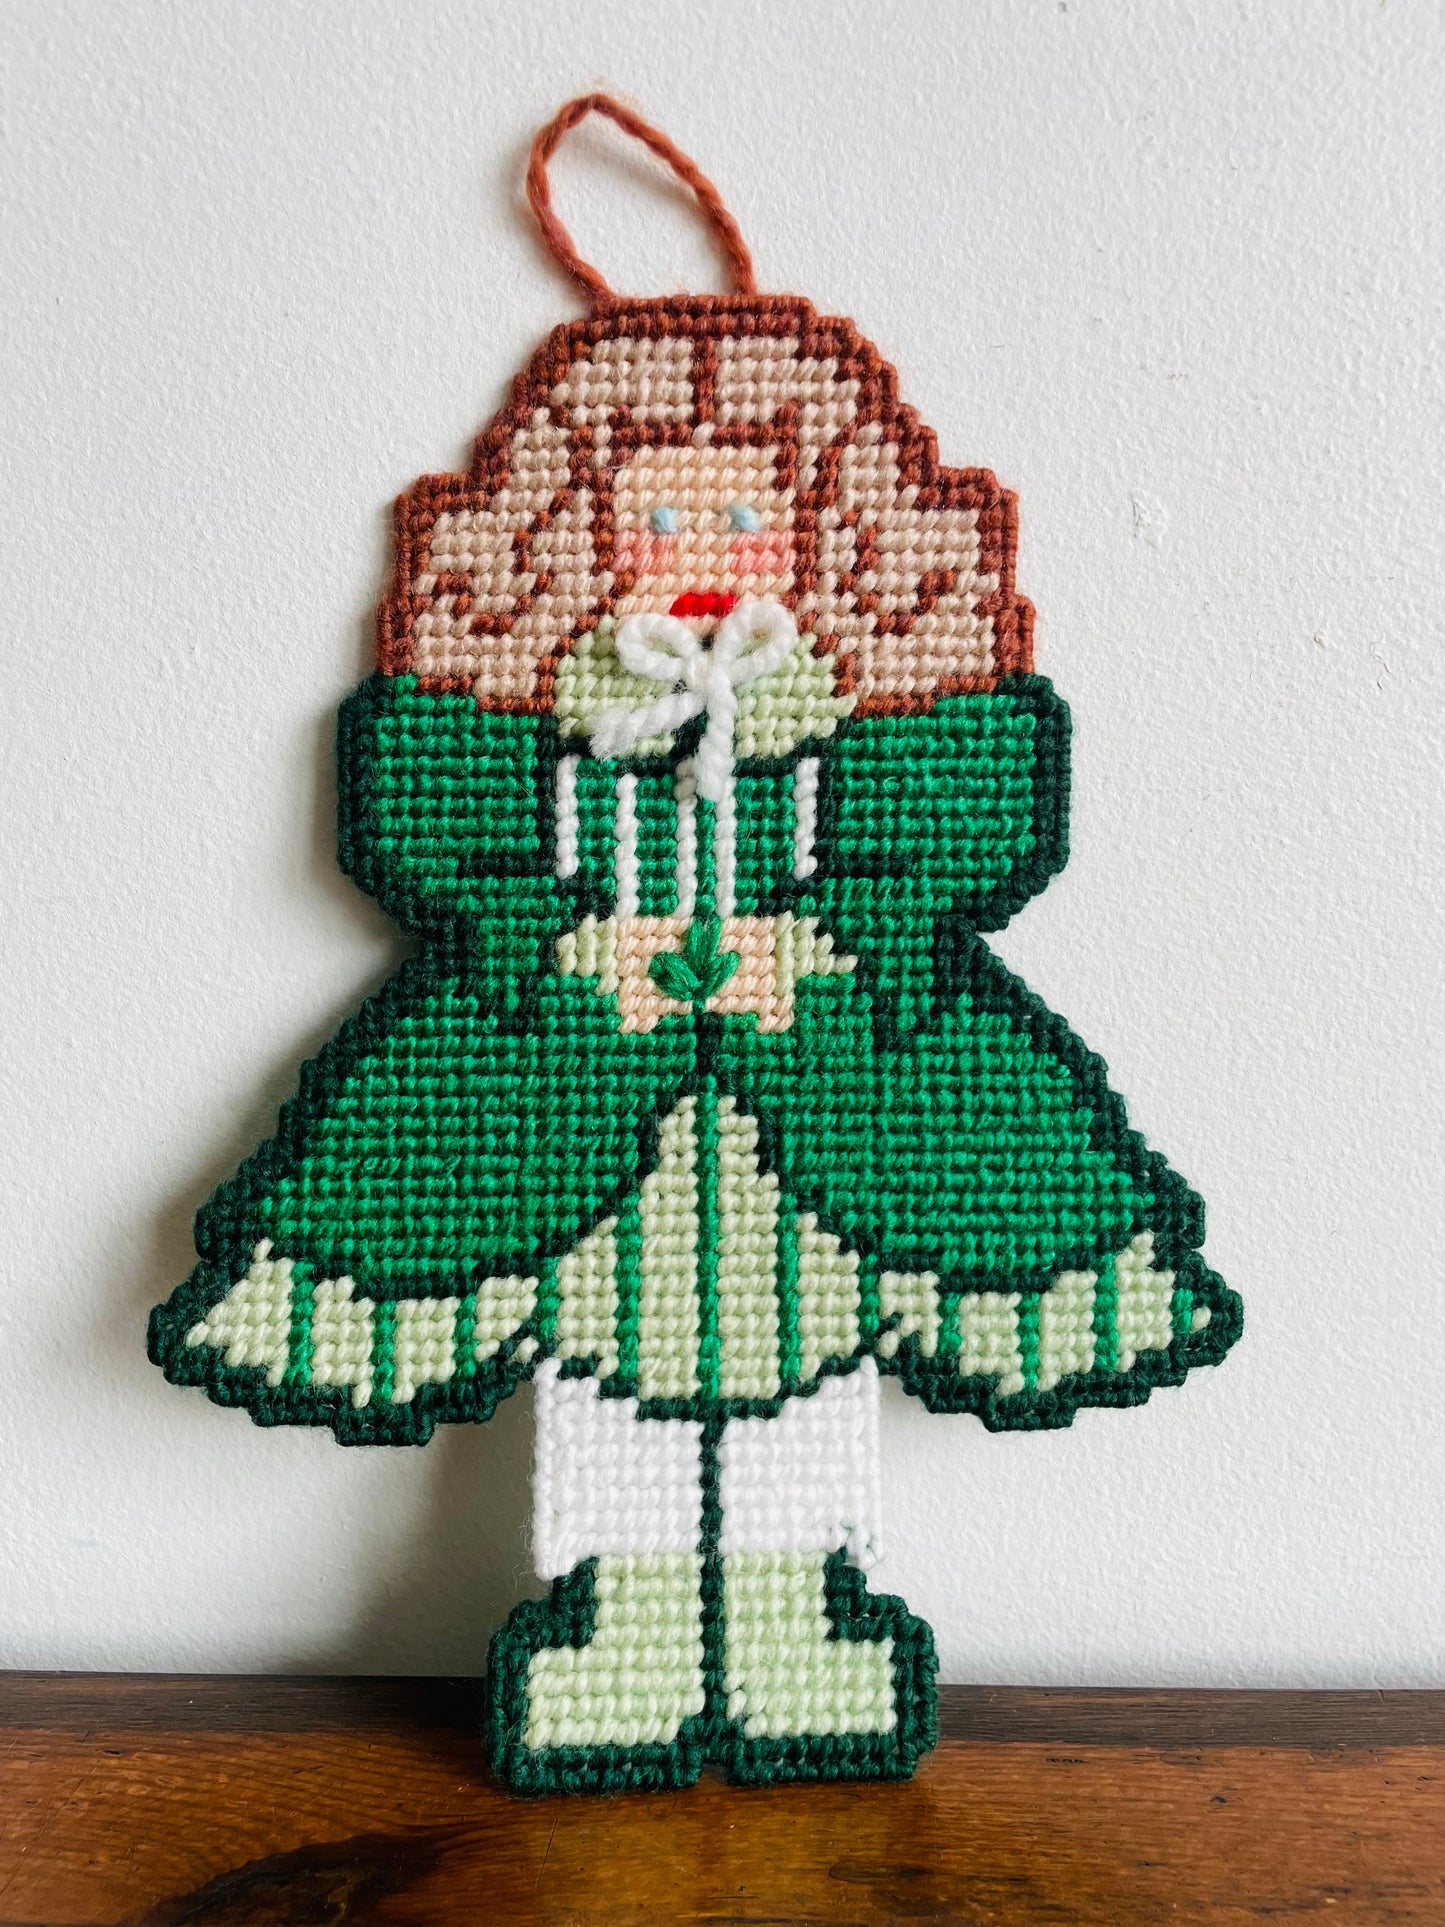 St. Patrick's Day Holiday Bundle of Plastic Canvas Art Decorations - Leprechaun Girl, Leprechaun with Pot of Gold & Hat with Shamrocks - Set of 3